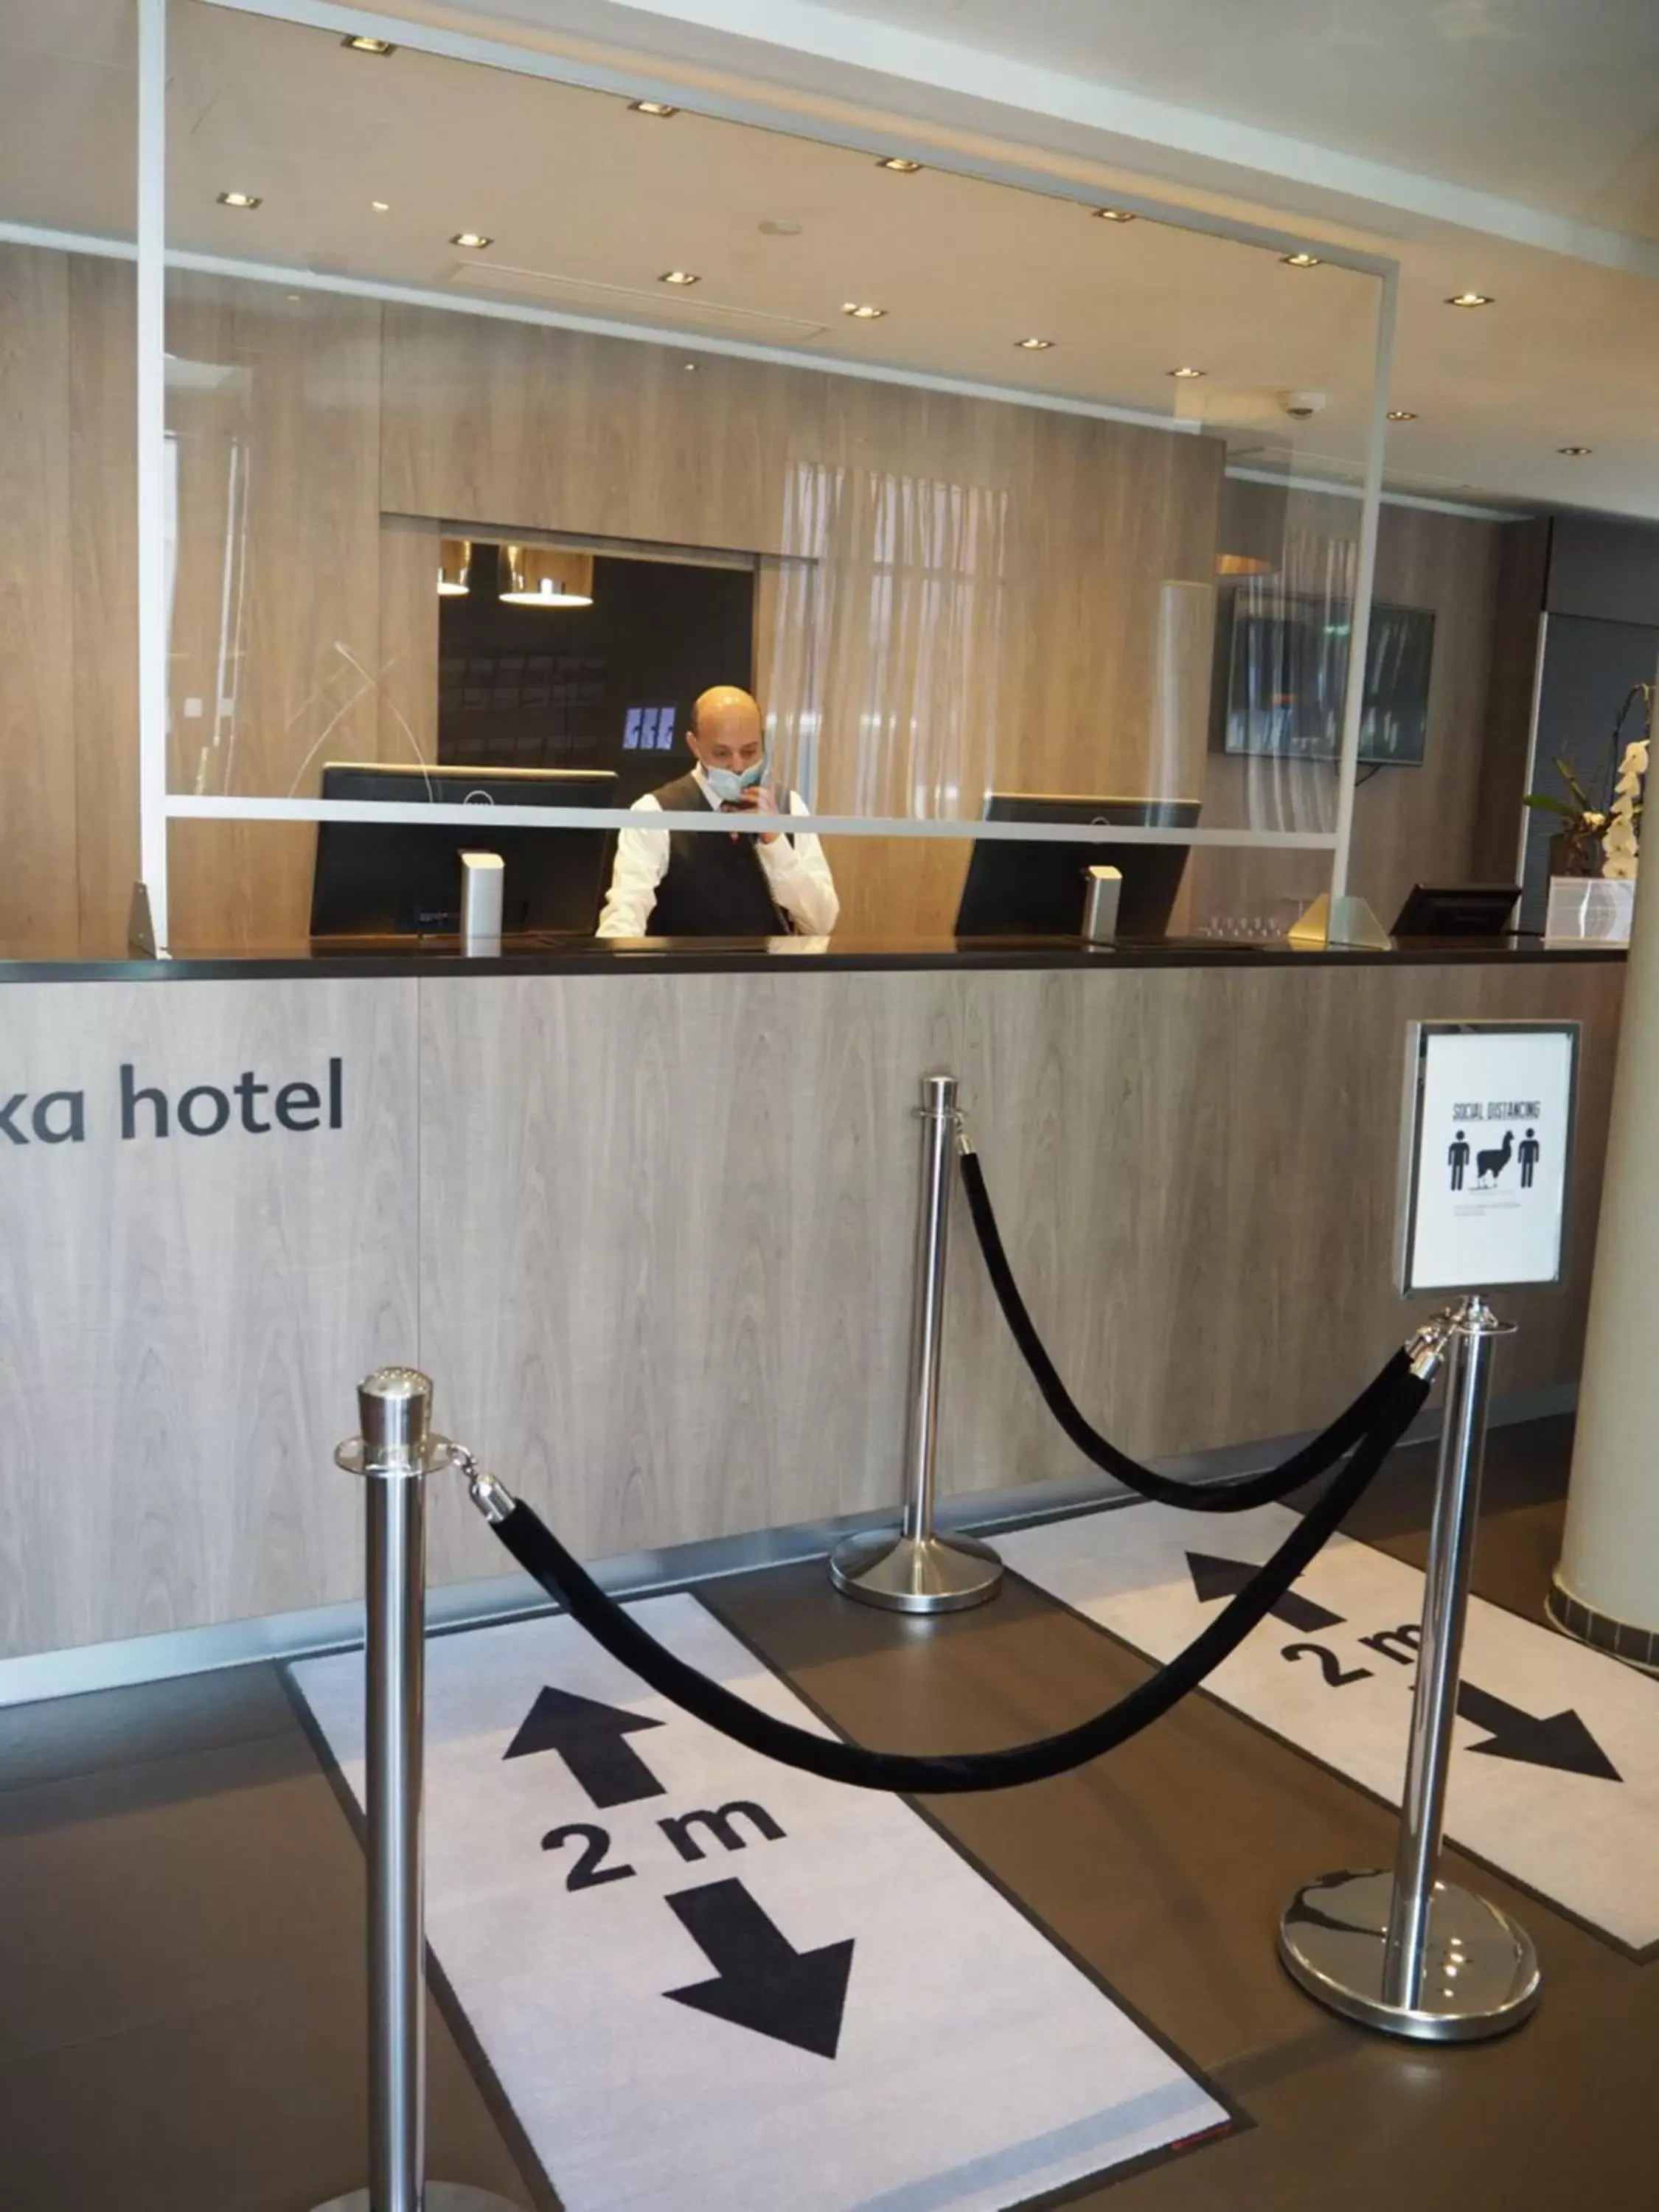 Lobby or reception in relexa hotel München